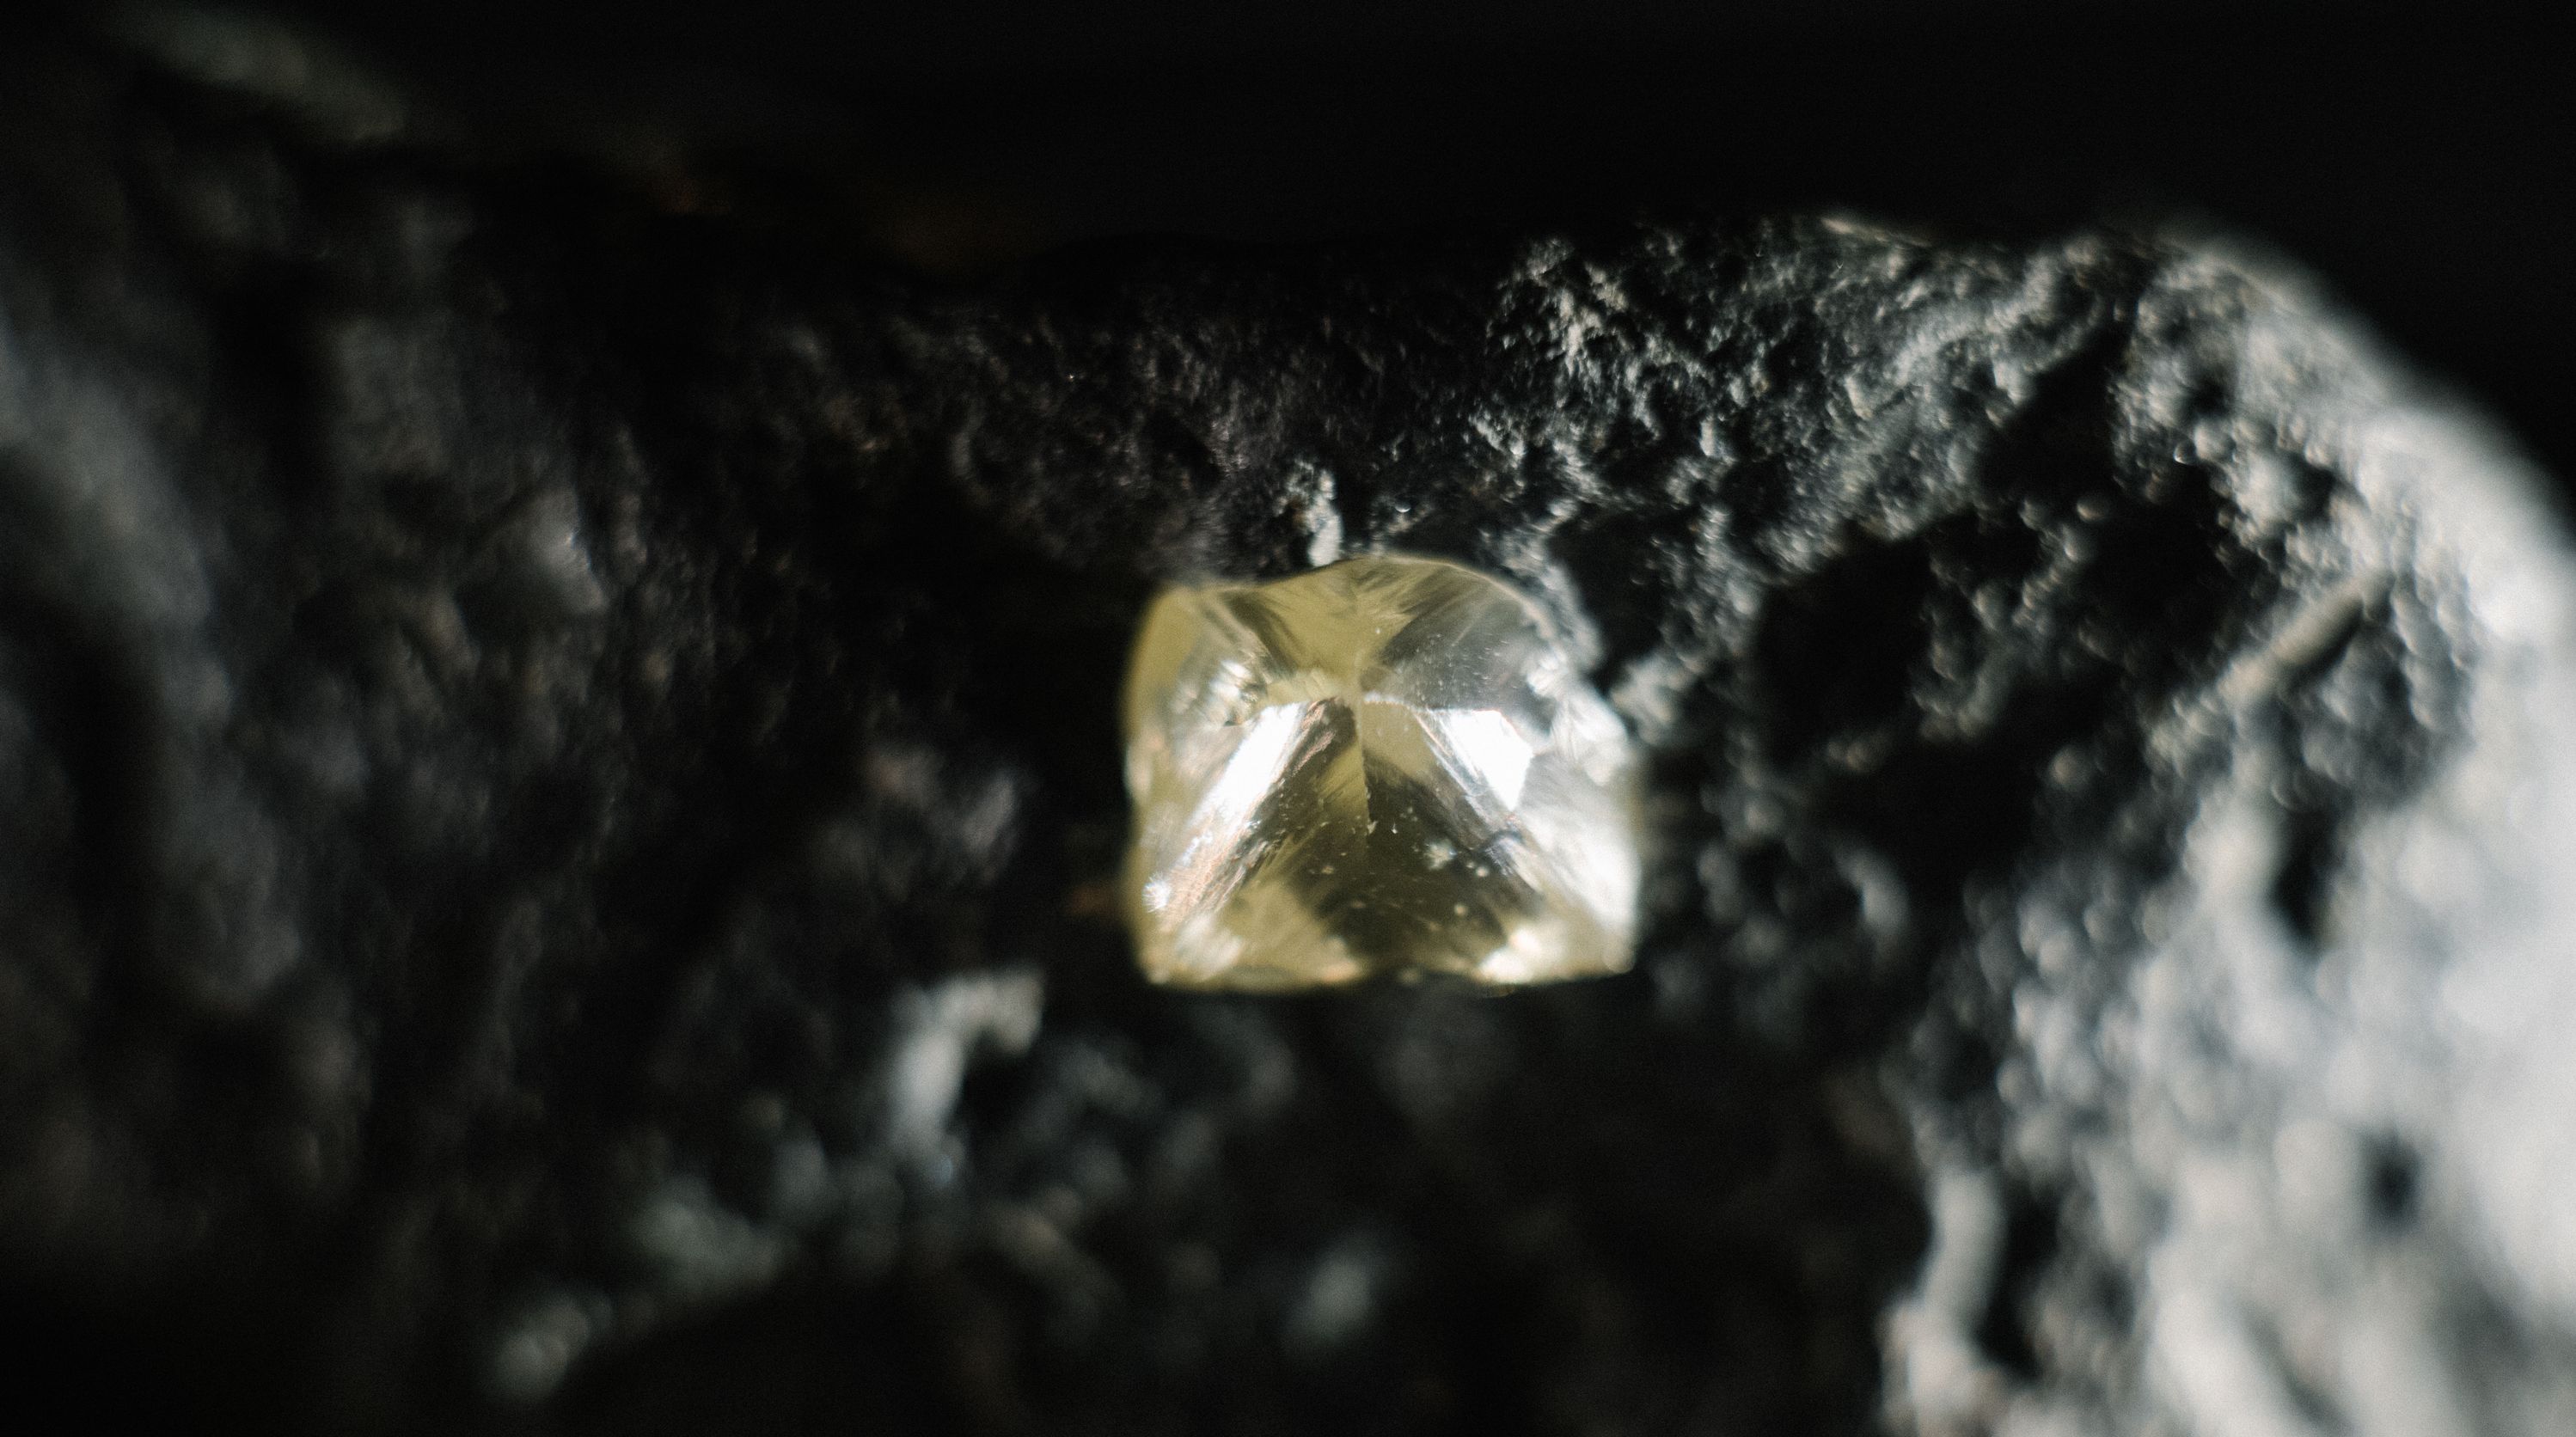 A close up of a diamond on a black rock